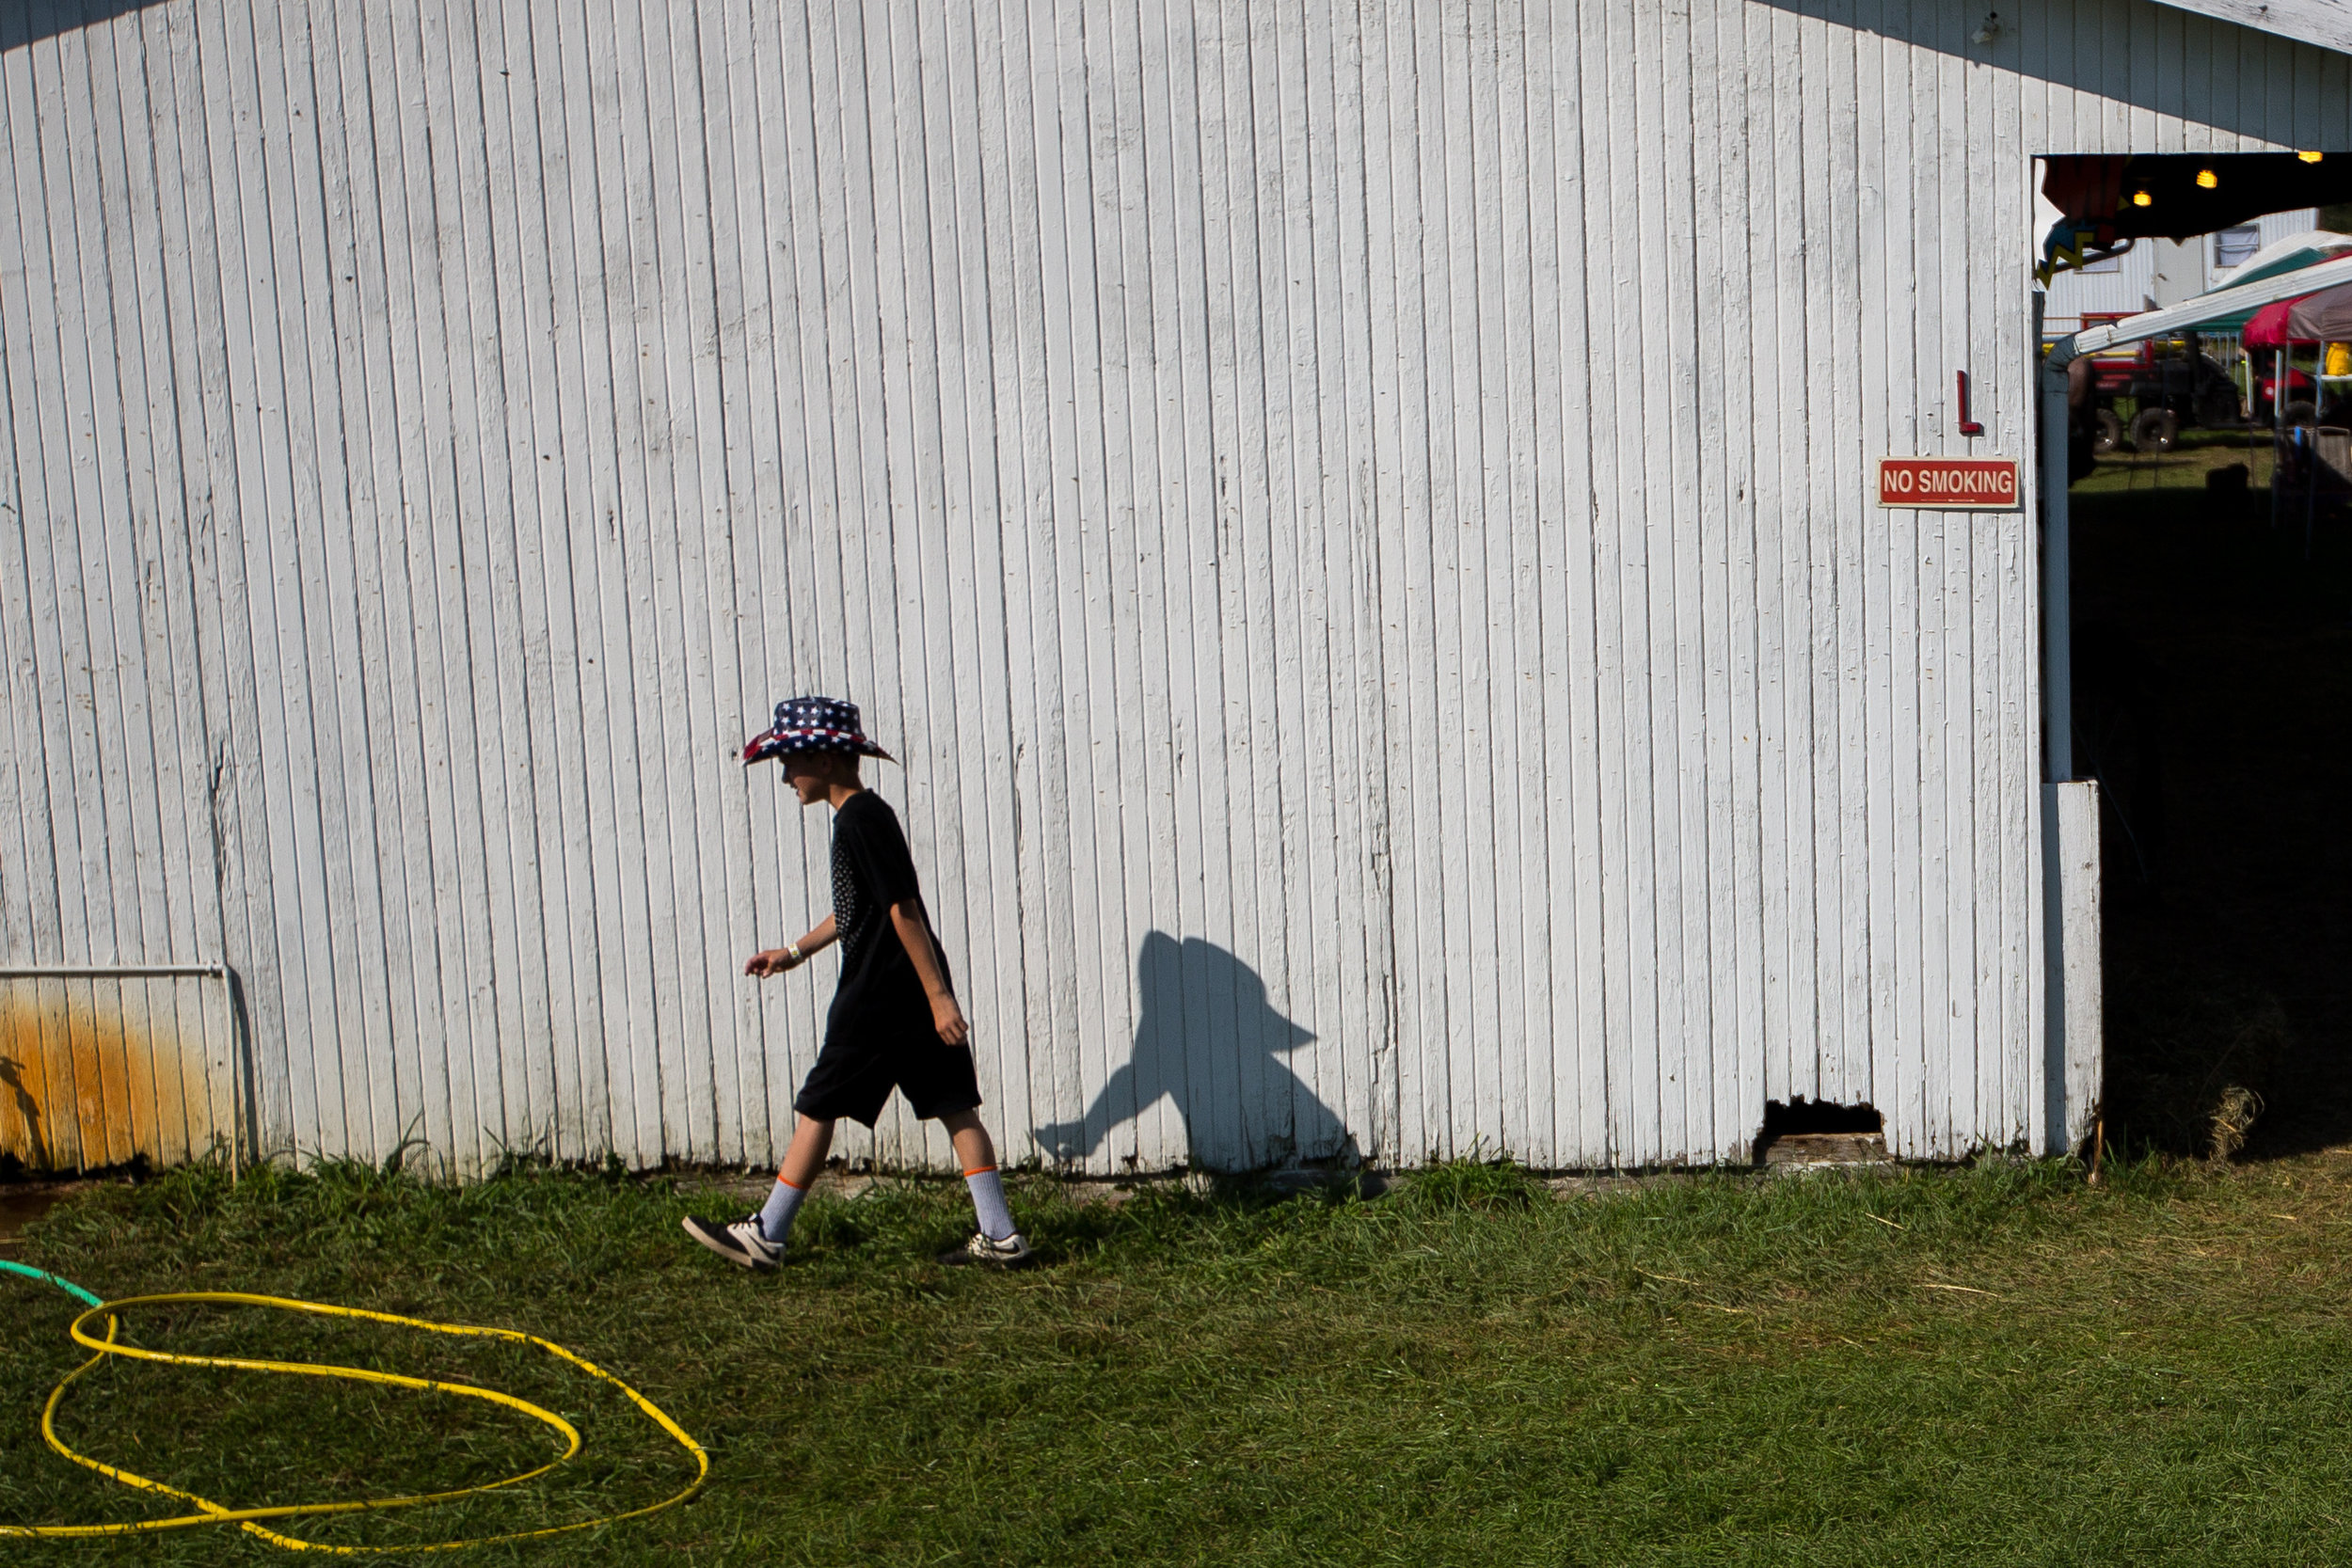  Trent "Beanz" Gurrieri, 11, walks past a barn at the Hookstown Fair in Hookstown on Saturday evening.  